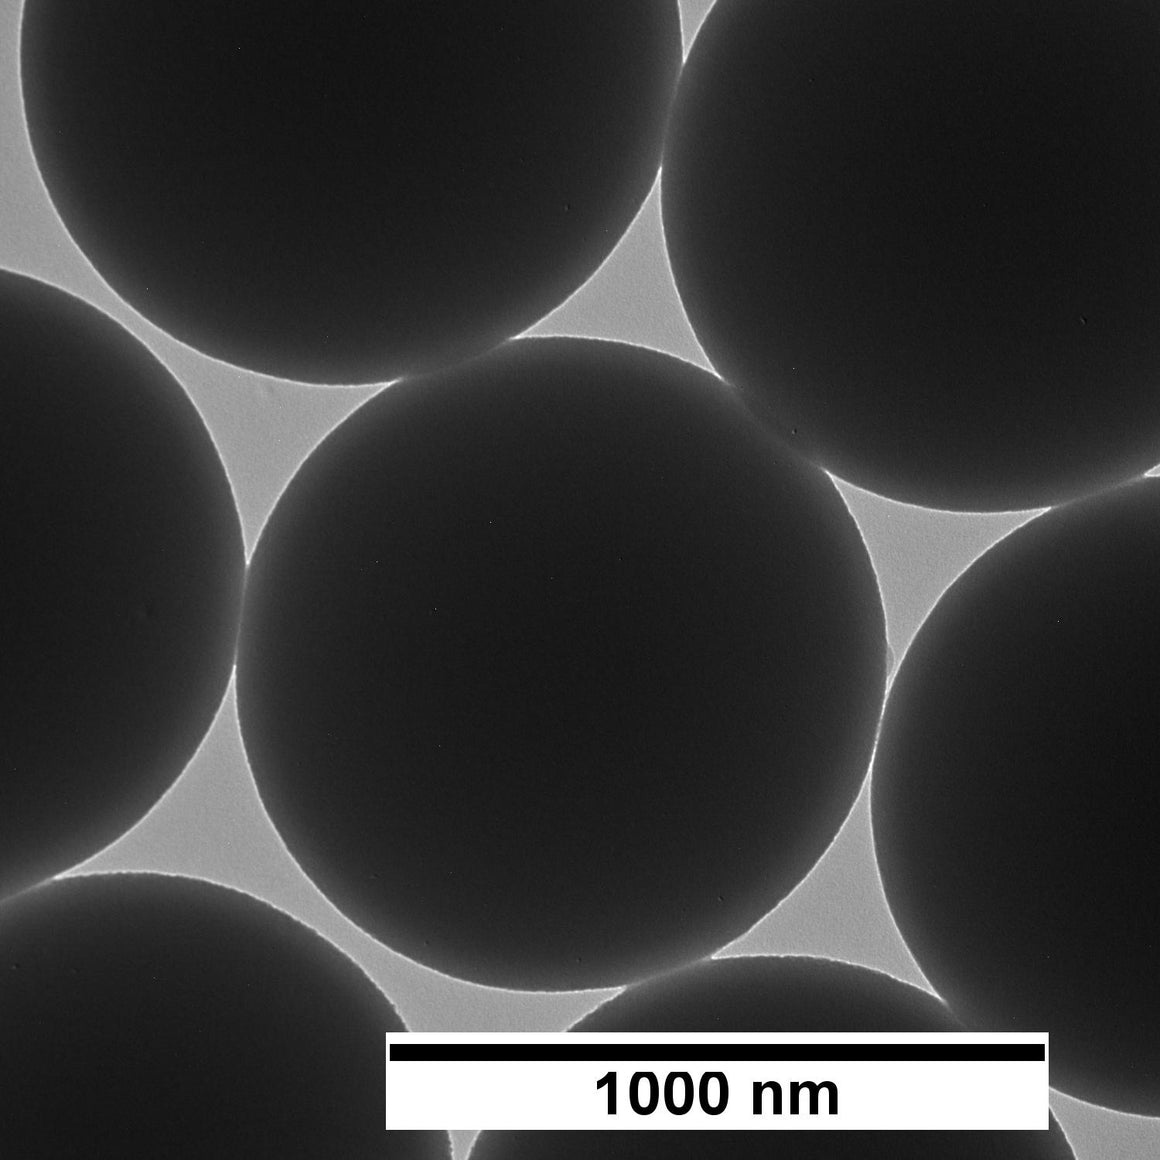 NanoXact Silica Nanospheres